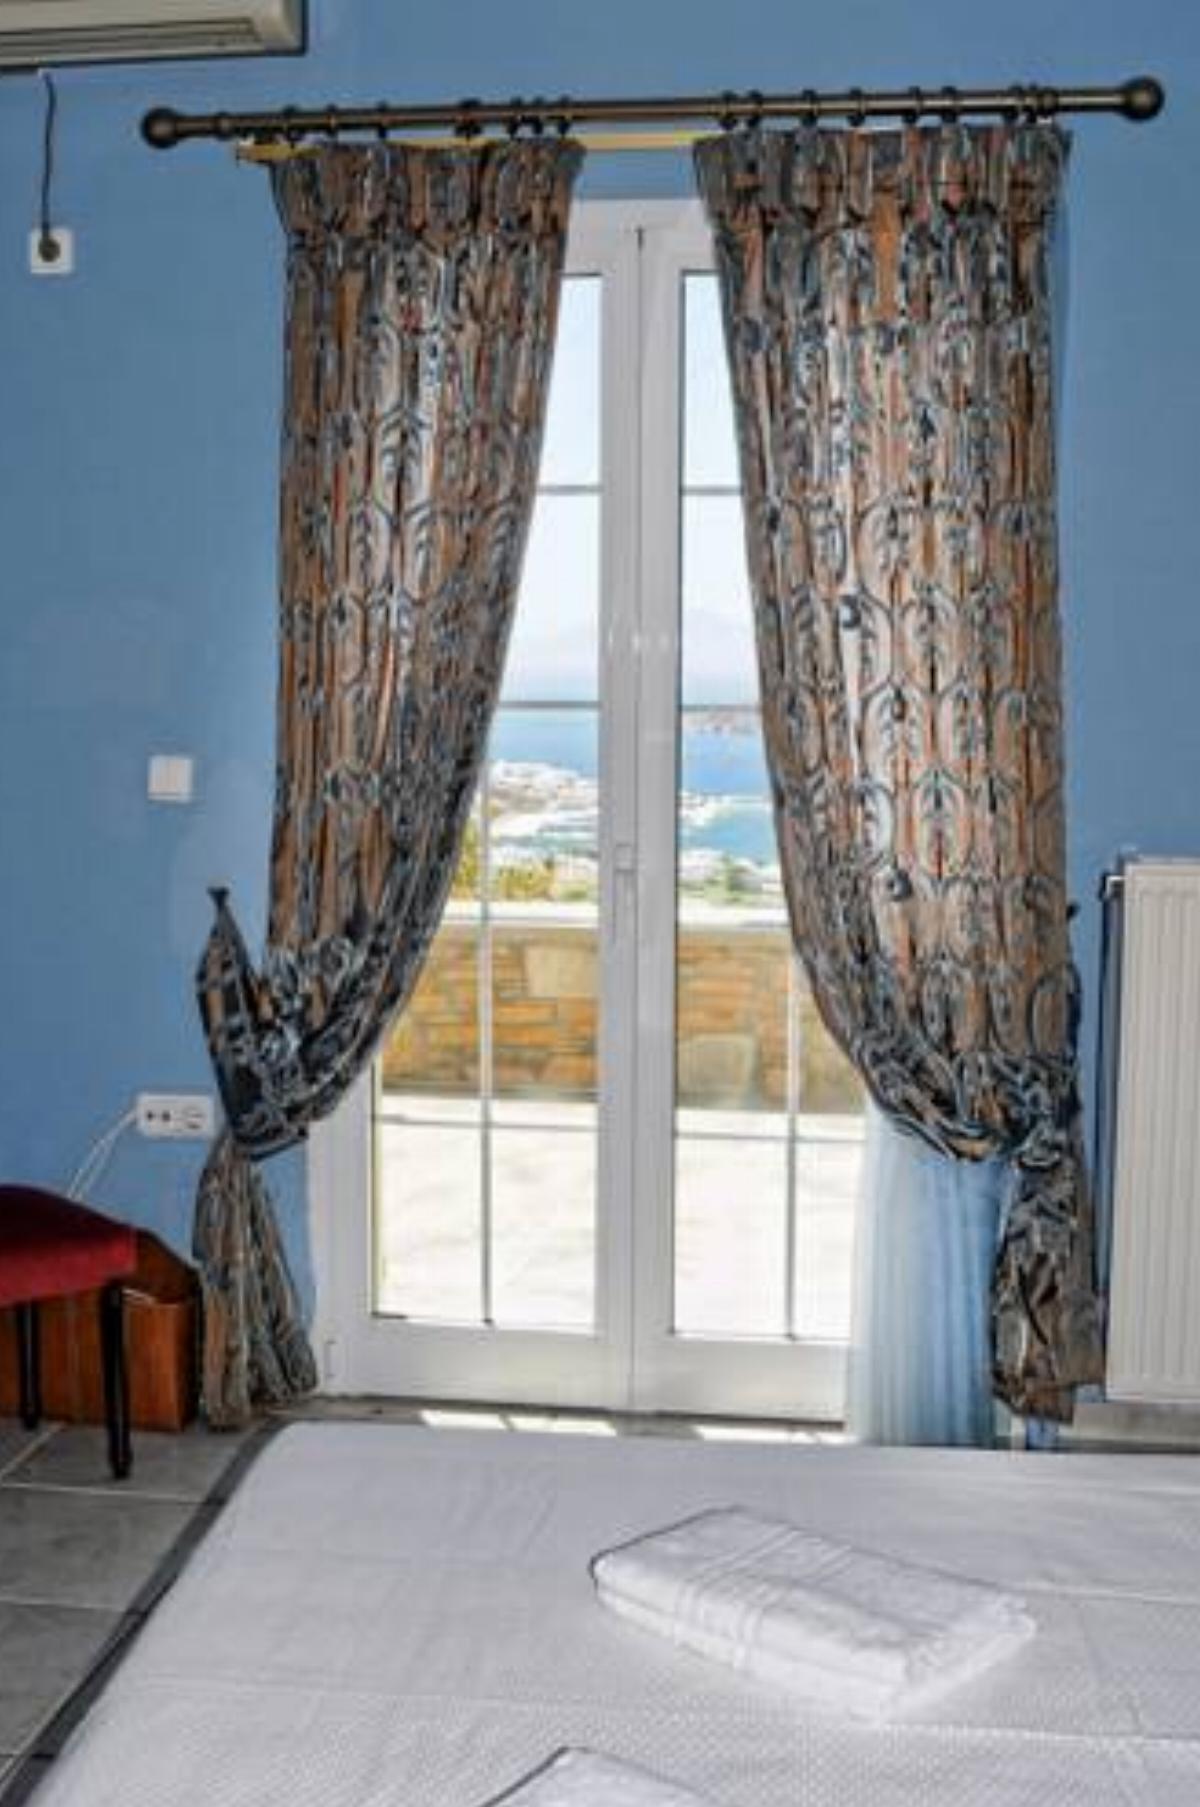 The Blue Horizon Villa Hotel Livadion Greece